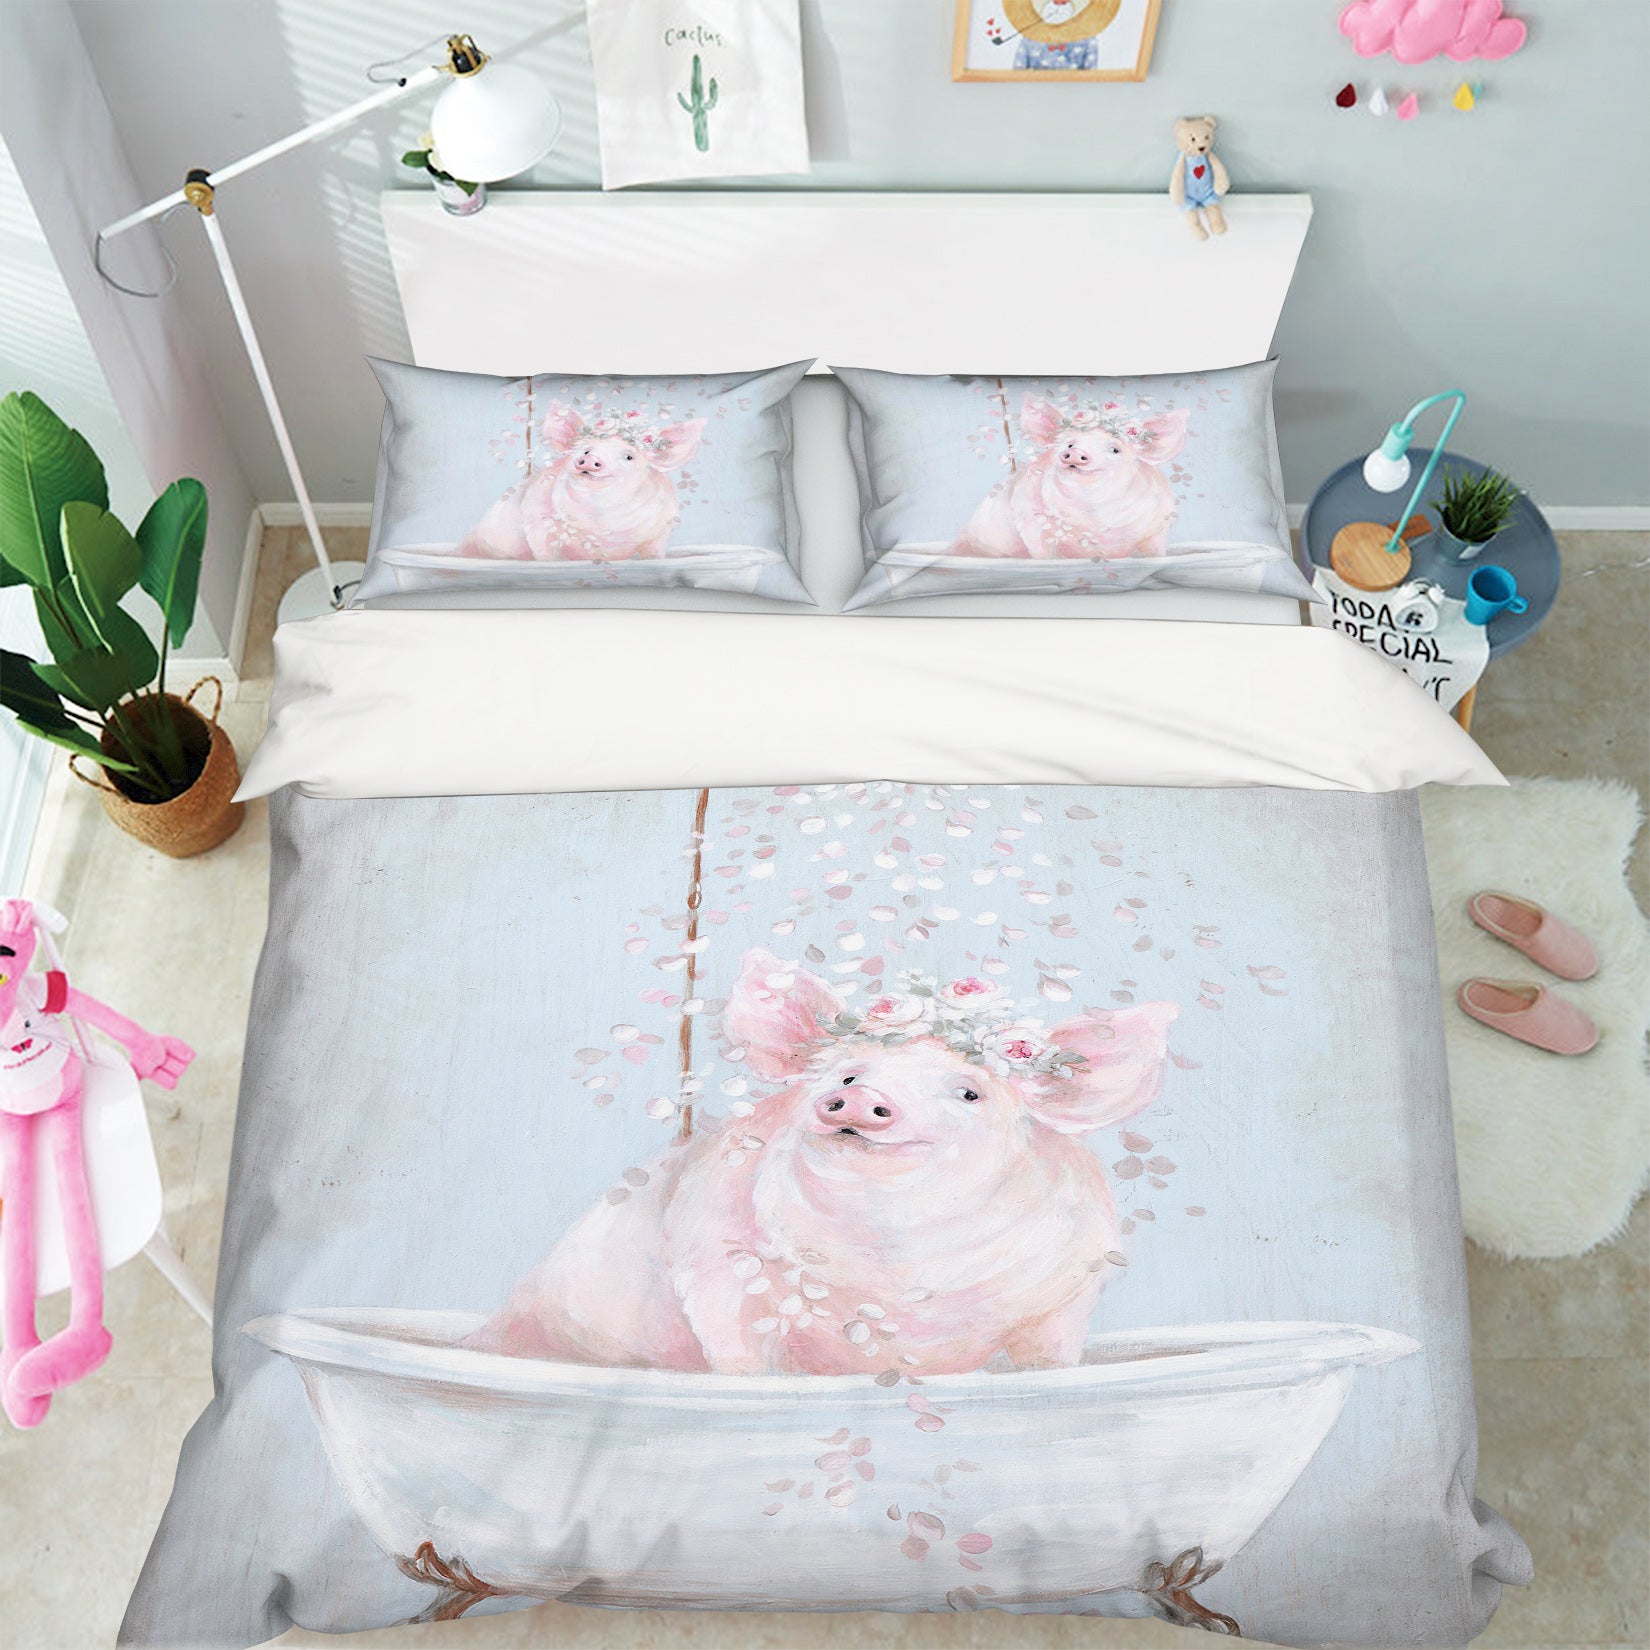 3D Wreath Pig Bath 2040 Debi Coules Bedding Bed Pillowcases Quilt